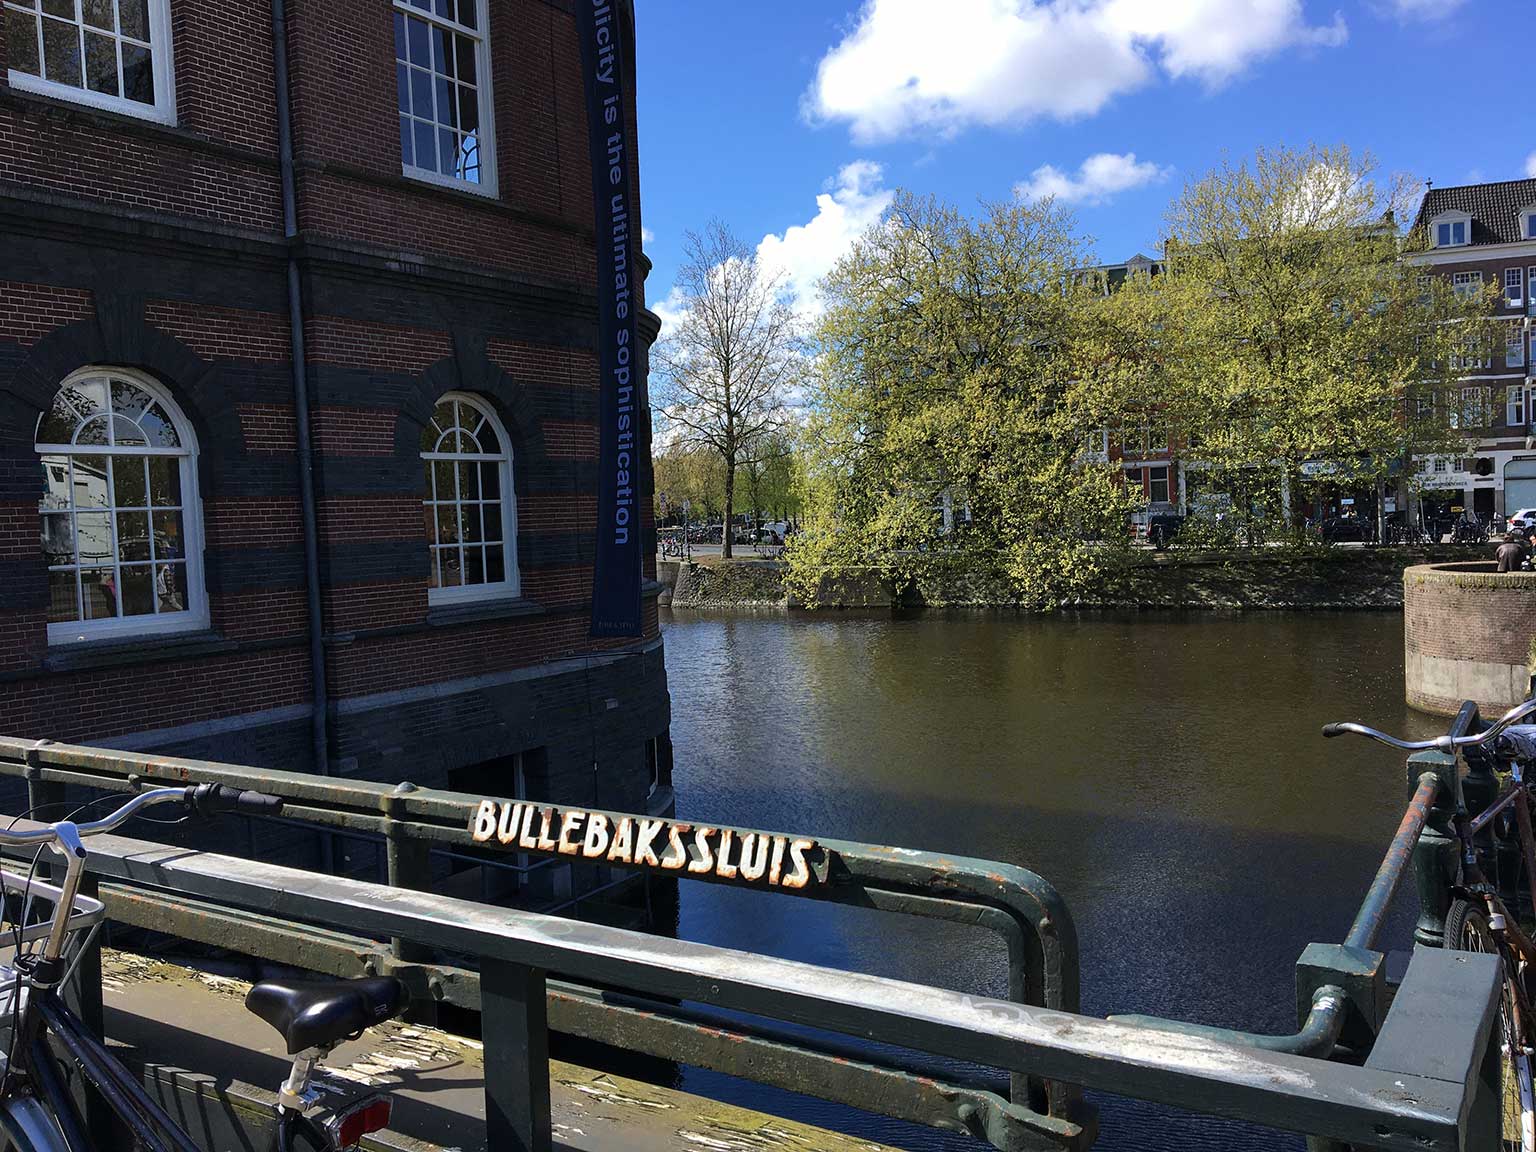 Bullebakssluis, Amsterdam, name on the bridge railing